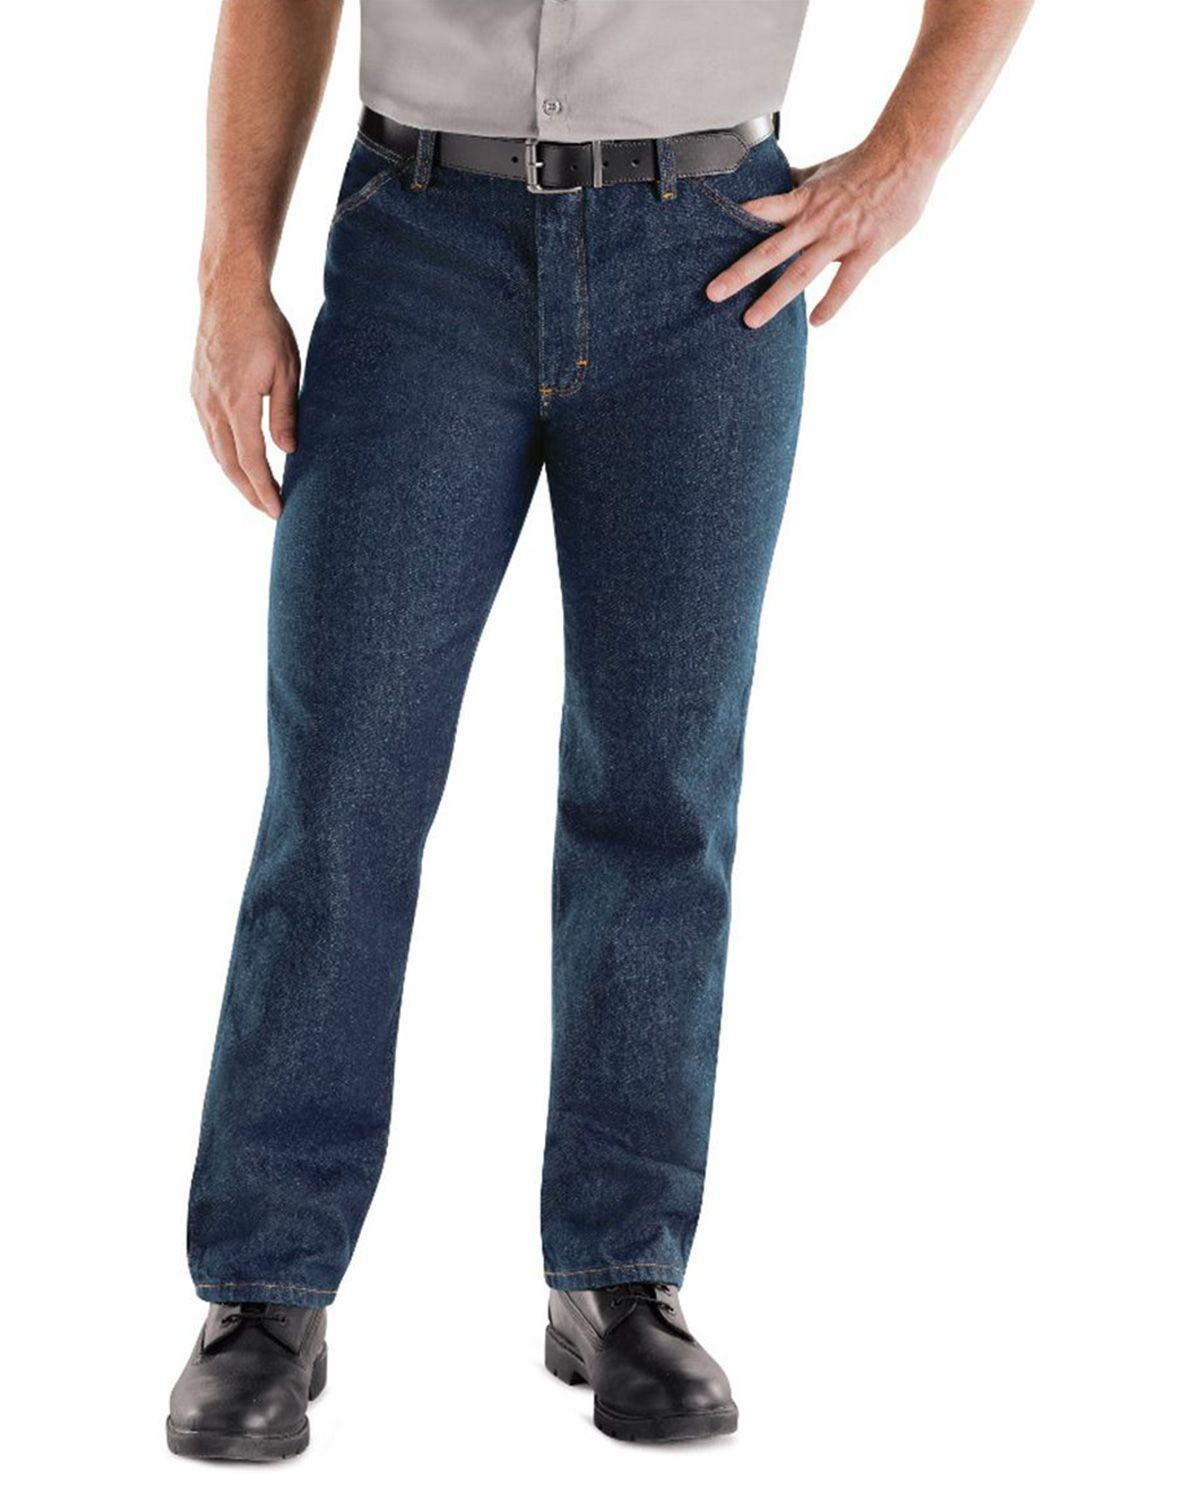 Red Kap PD54ODD Men's Classic Work Jeans - Odd Sizes - Prewashed Indigo - 29W x 34L #jeans